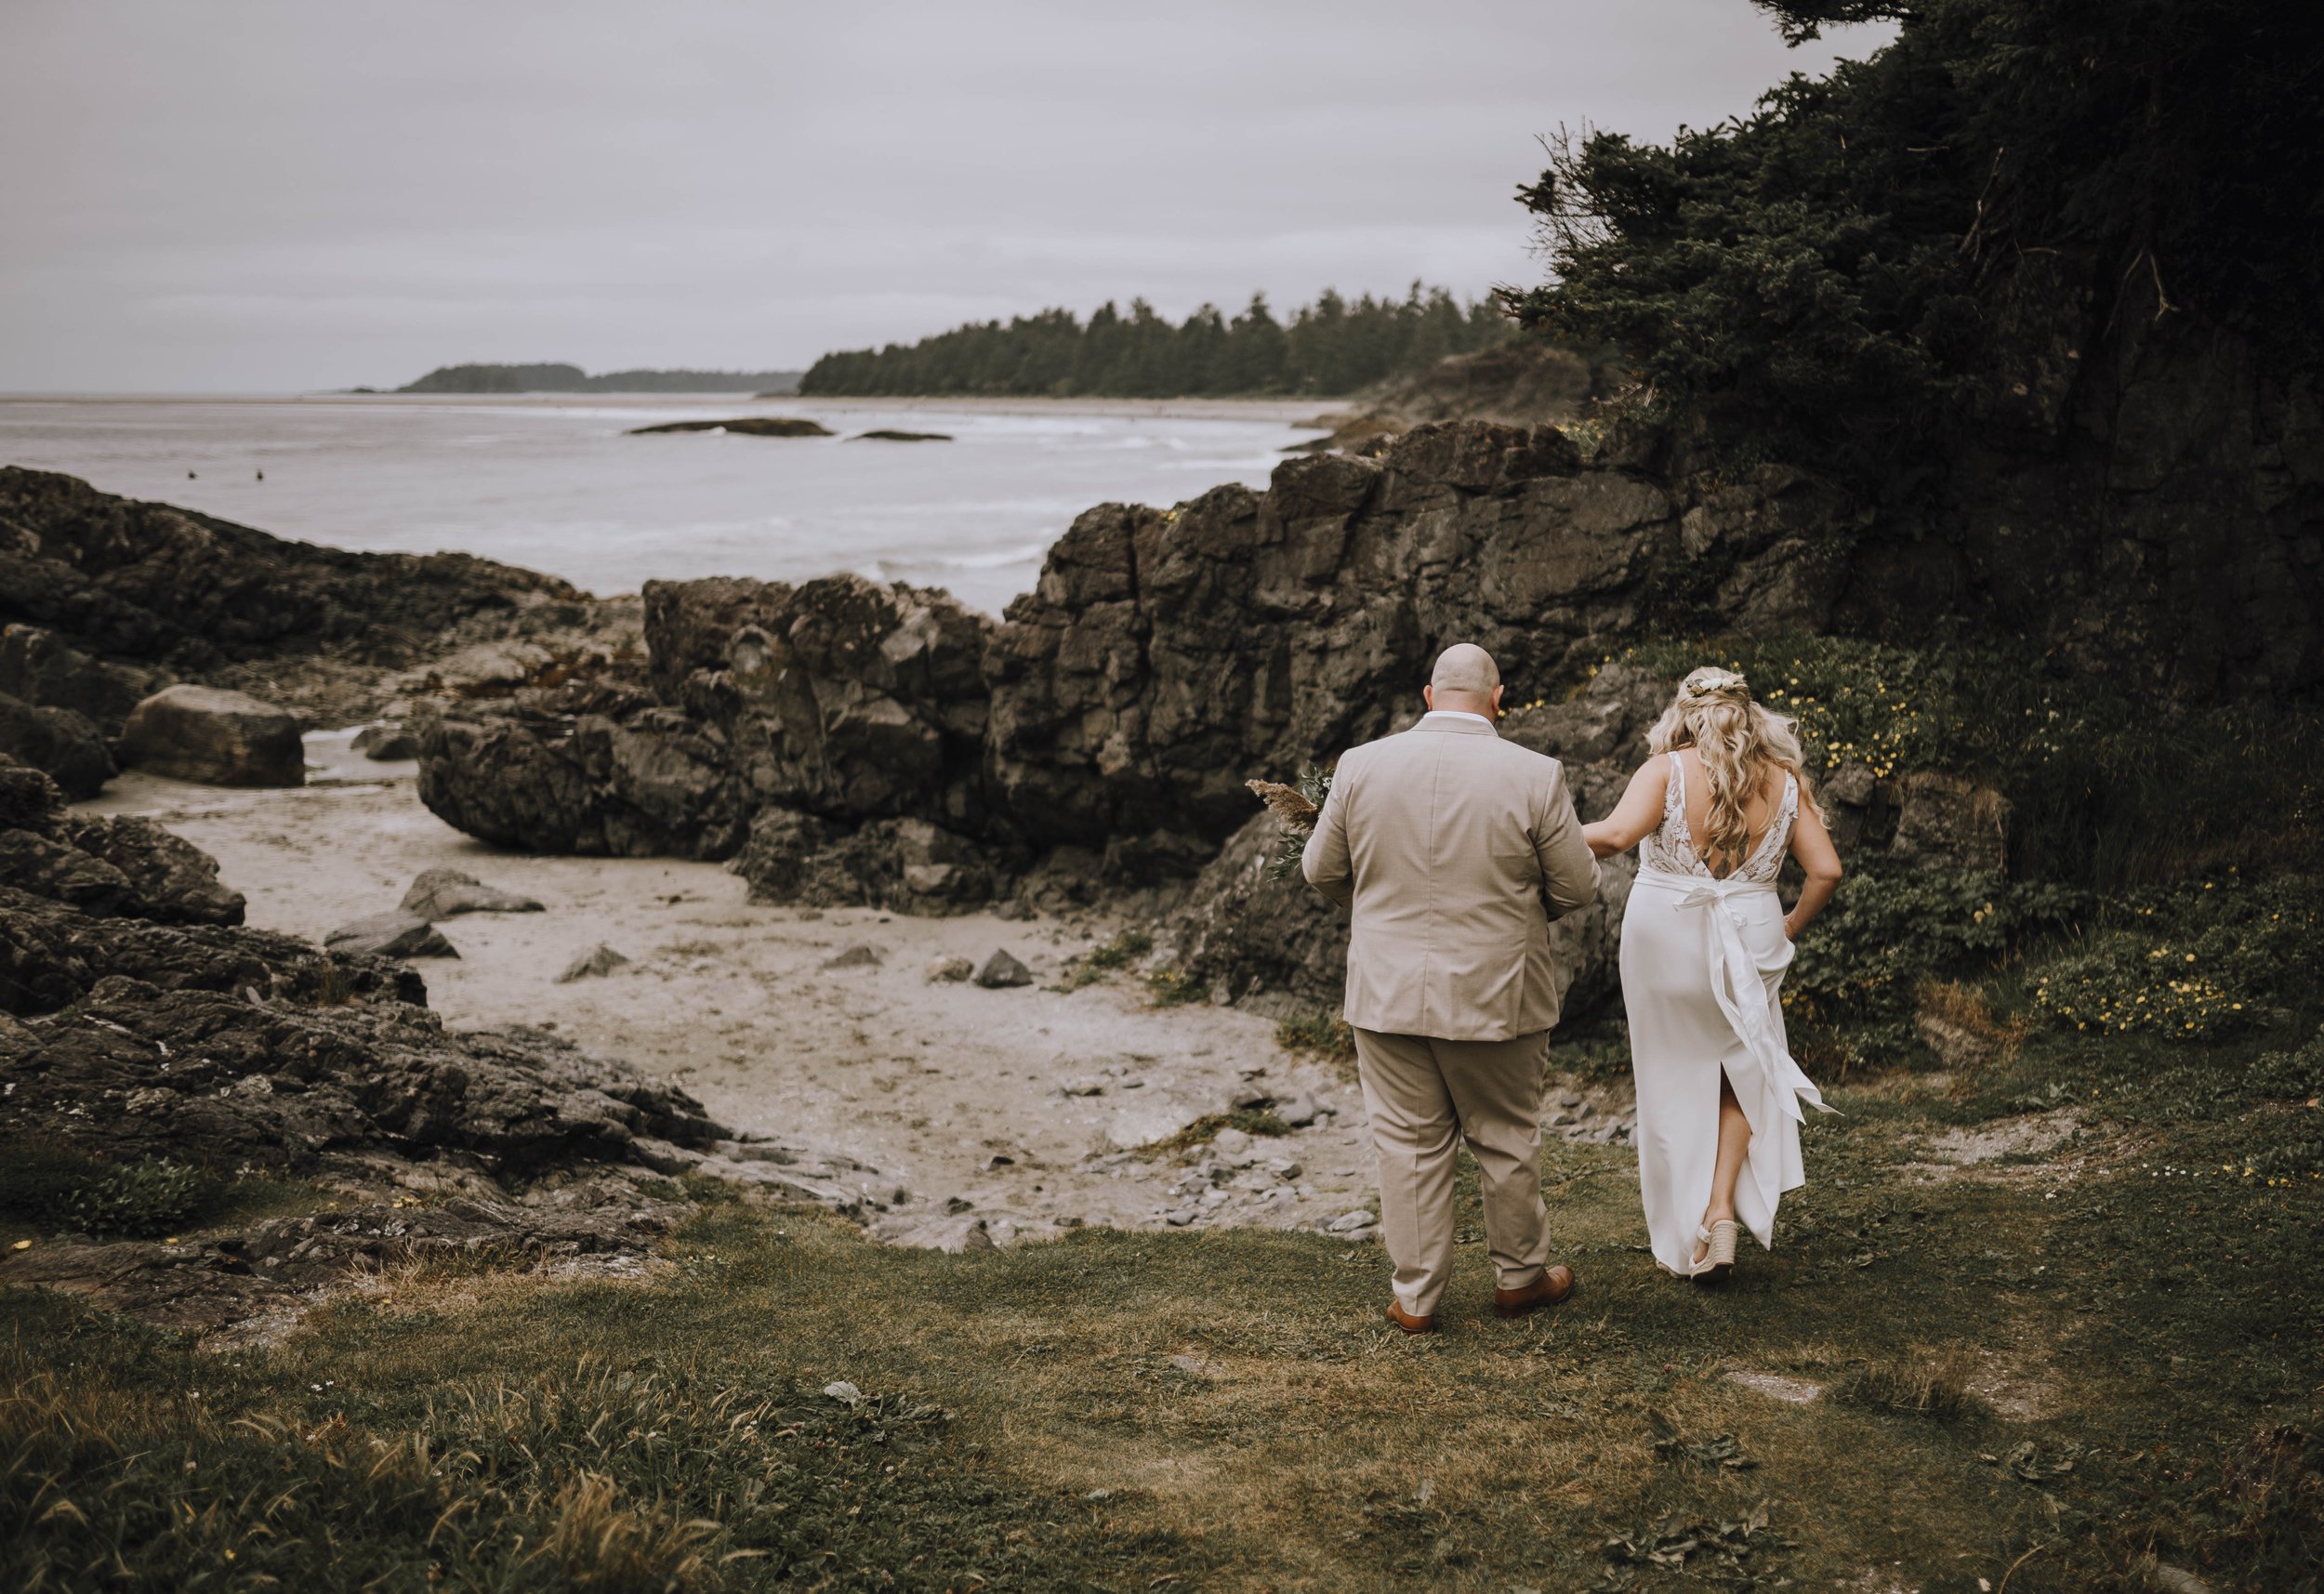 Jamie and Brad wedding - Tofino Vancouver Island British Columbia - Elyse Anna Photography-00634.jpg